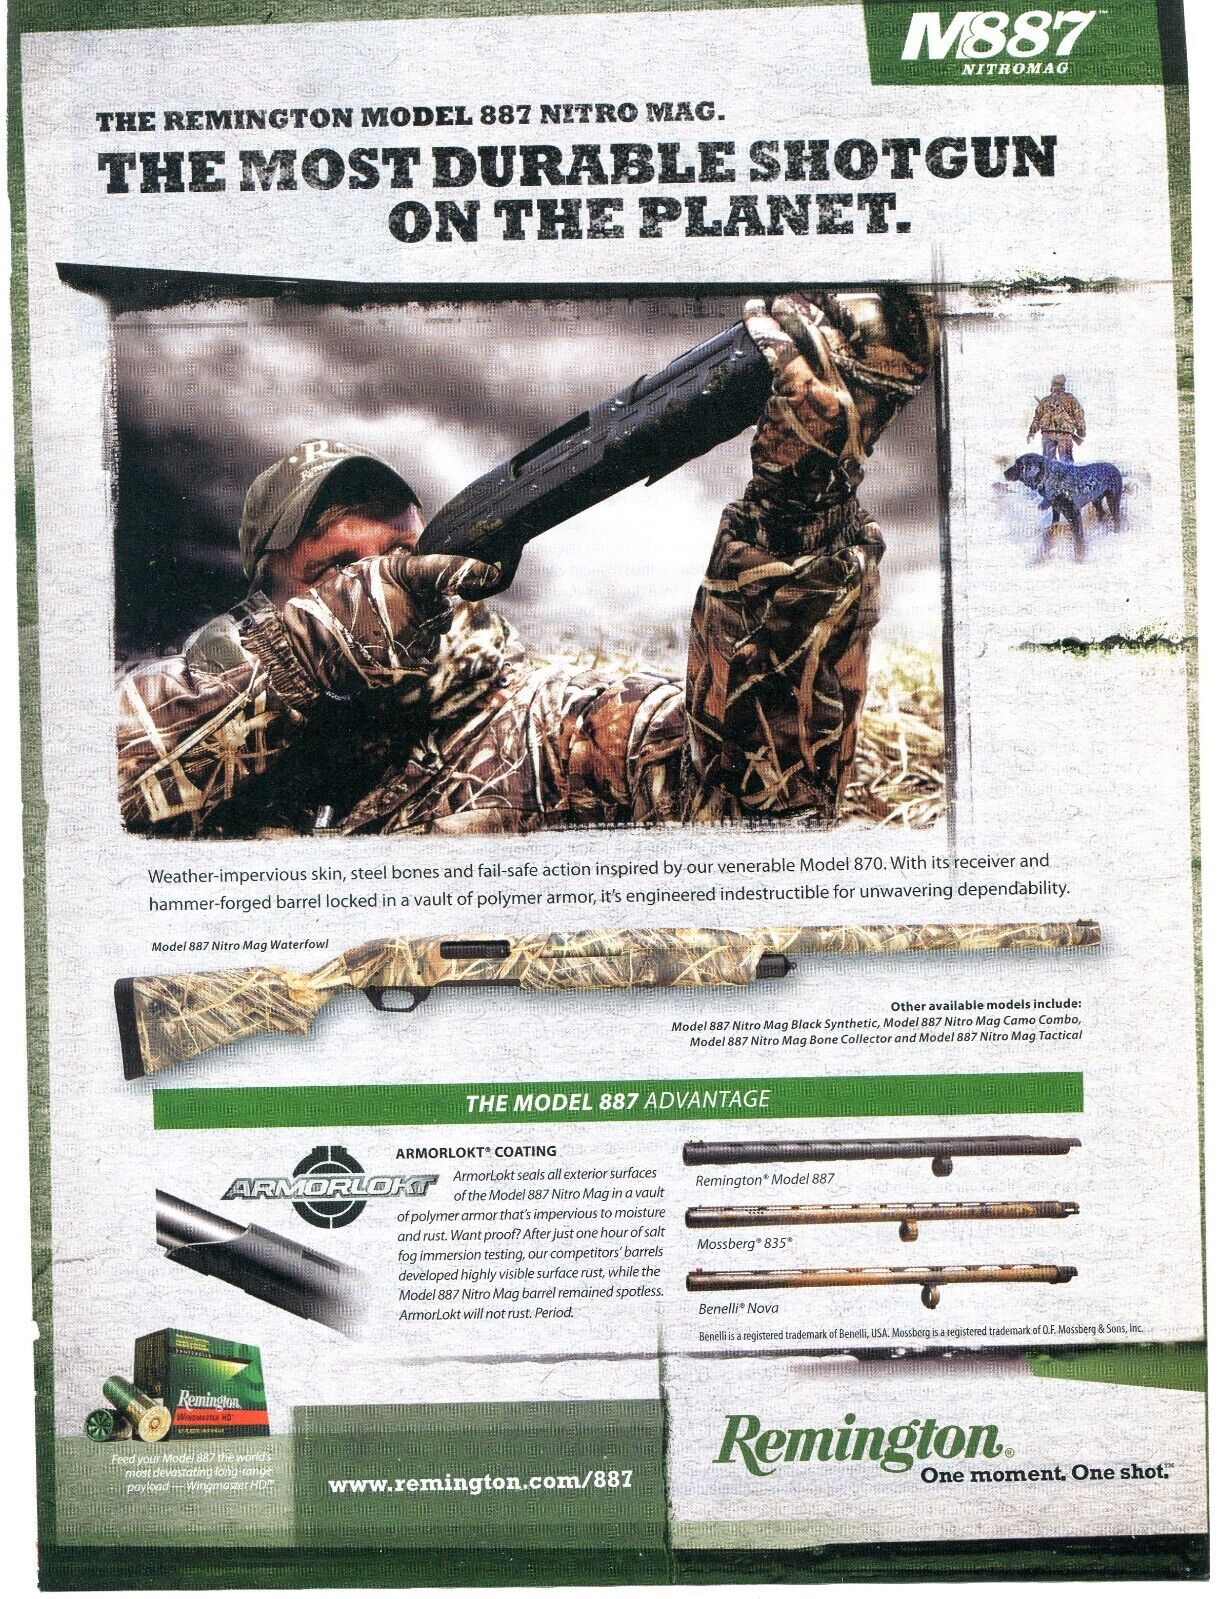 2010 Print Ad of Remington Model 887 Nitromag Shotgun